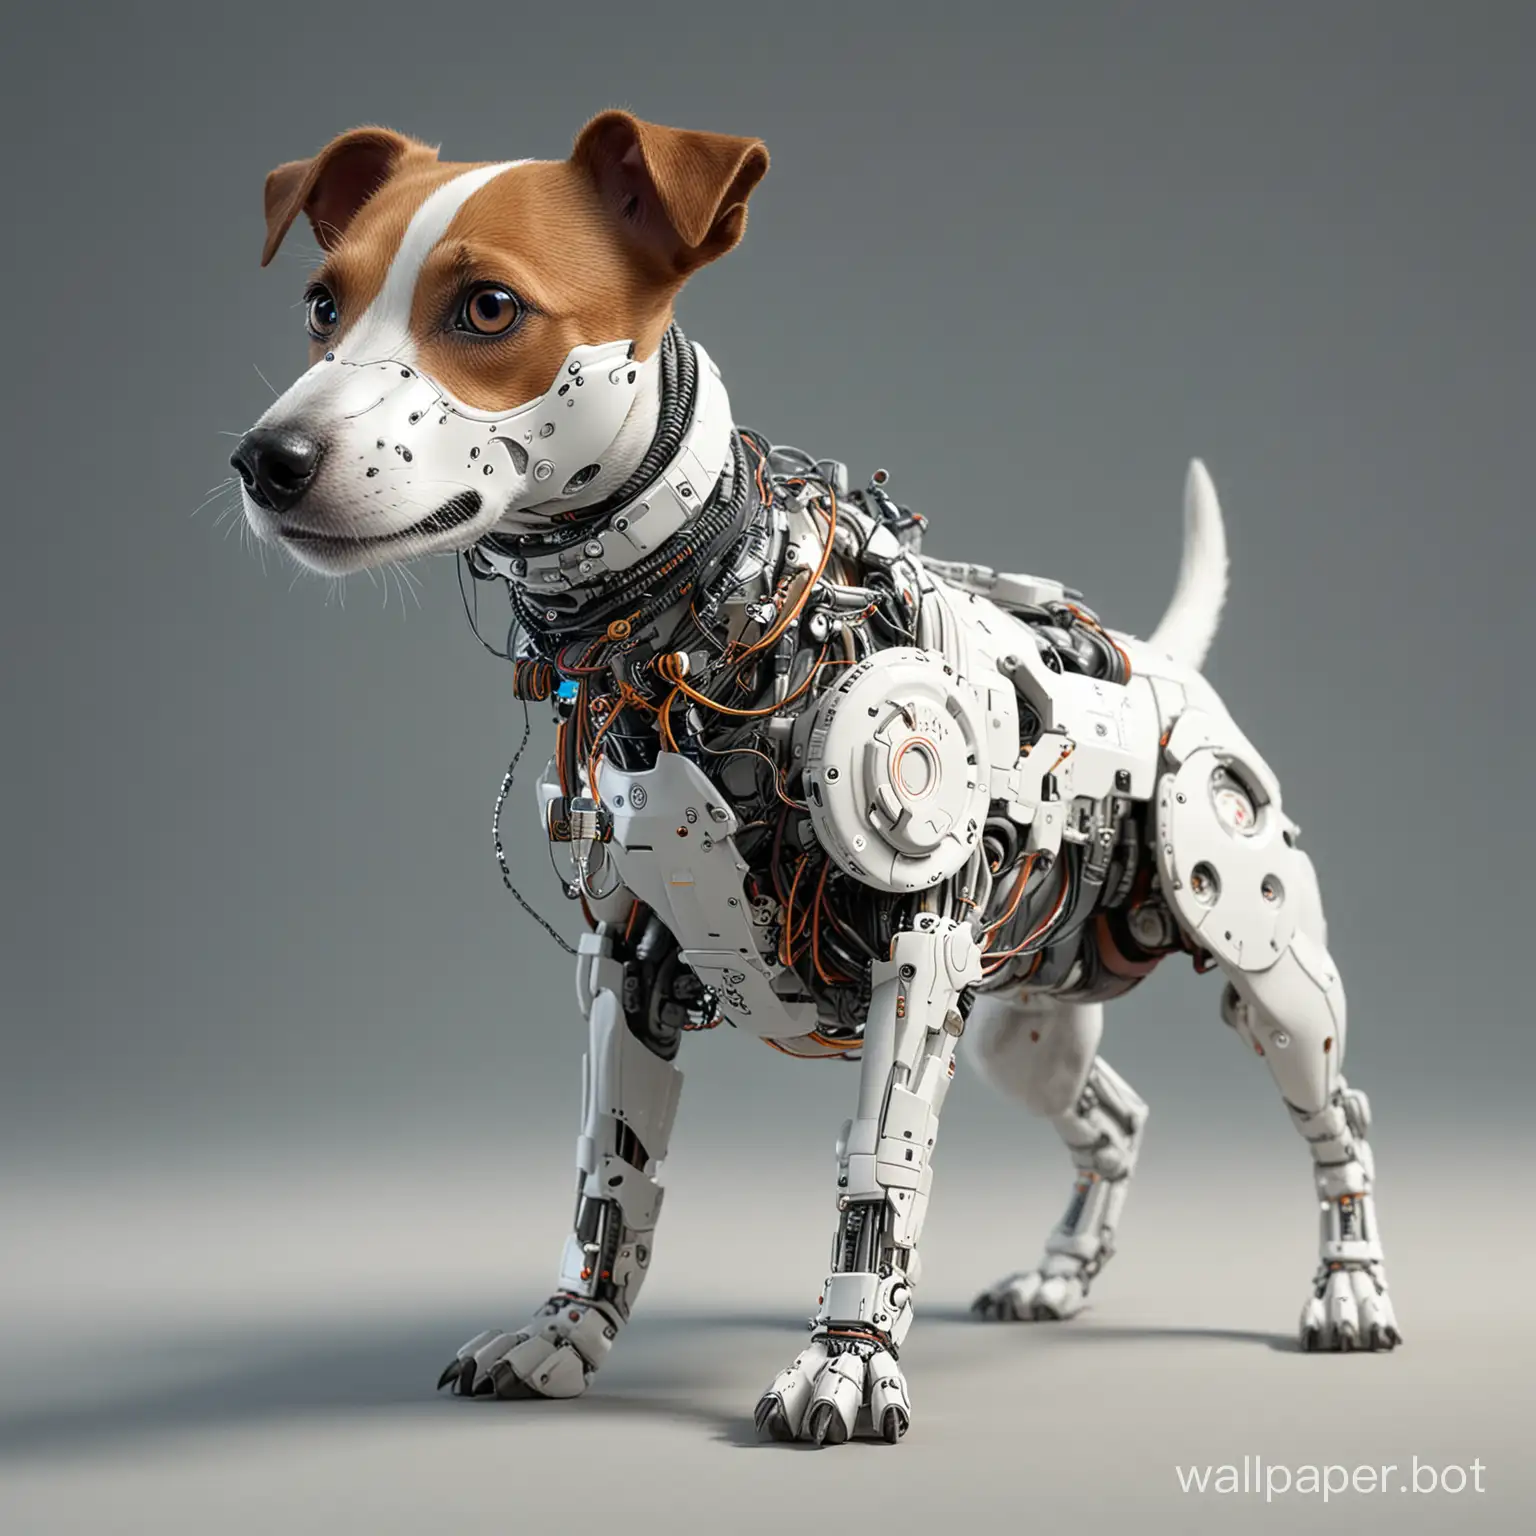 Cyborg-Jack-Russell-Terrier-Canine-Companion